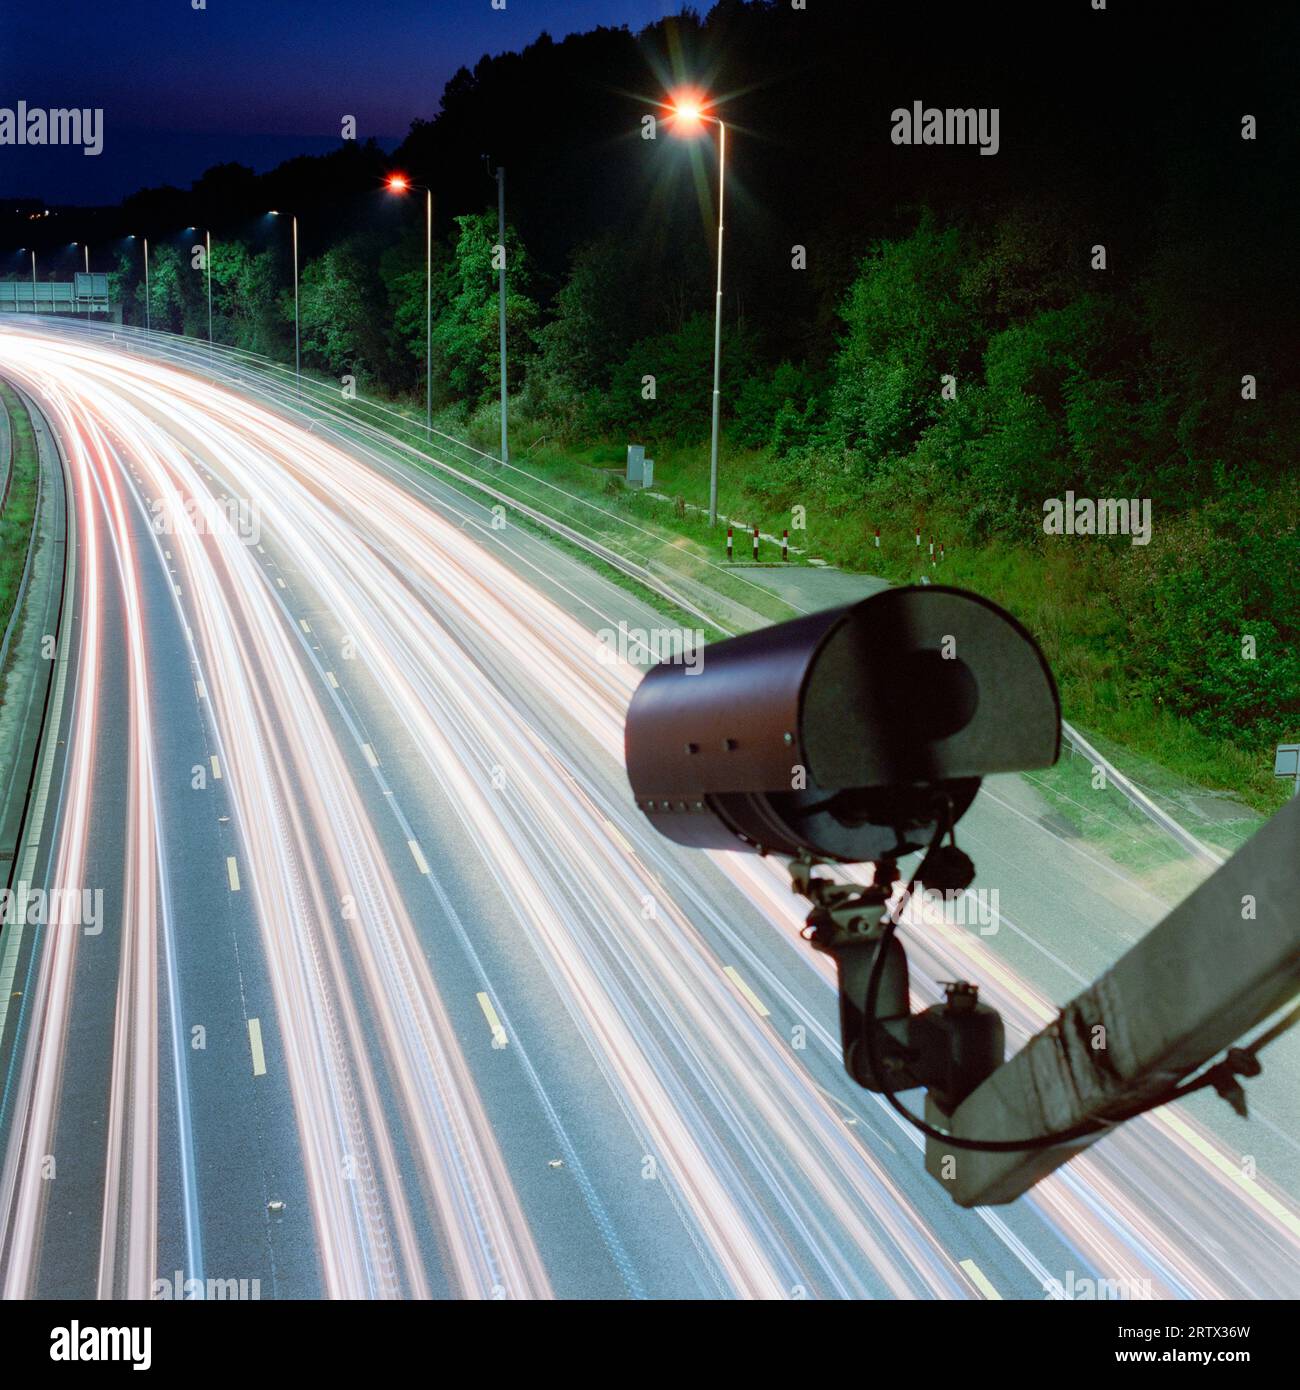 ANPR motorway camera. 'Surveillance state' - camera above lanes of traffic, long exposure at night, UK motorway. Theme, concepts. Copy space Stock Photo